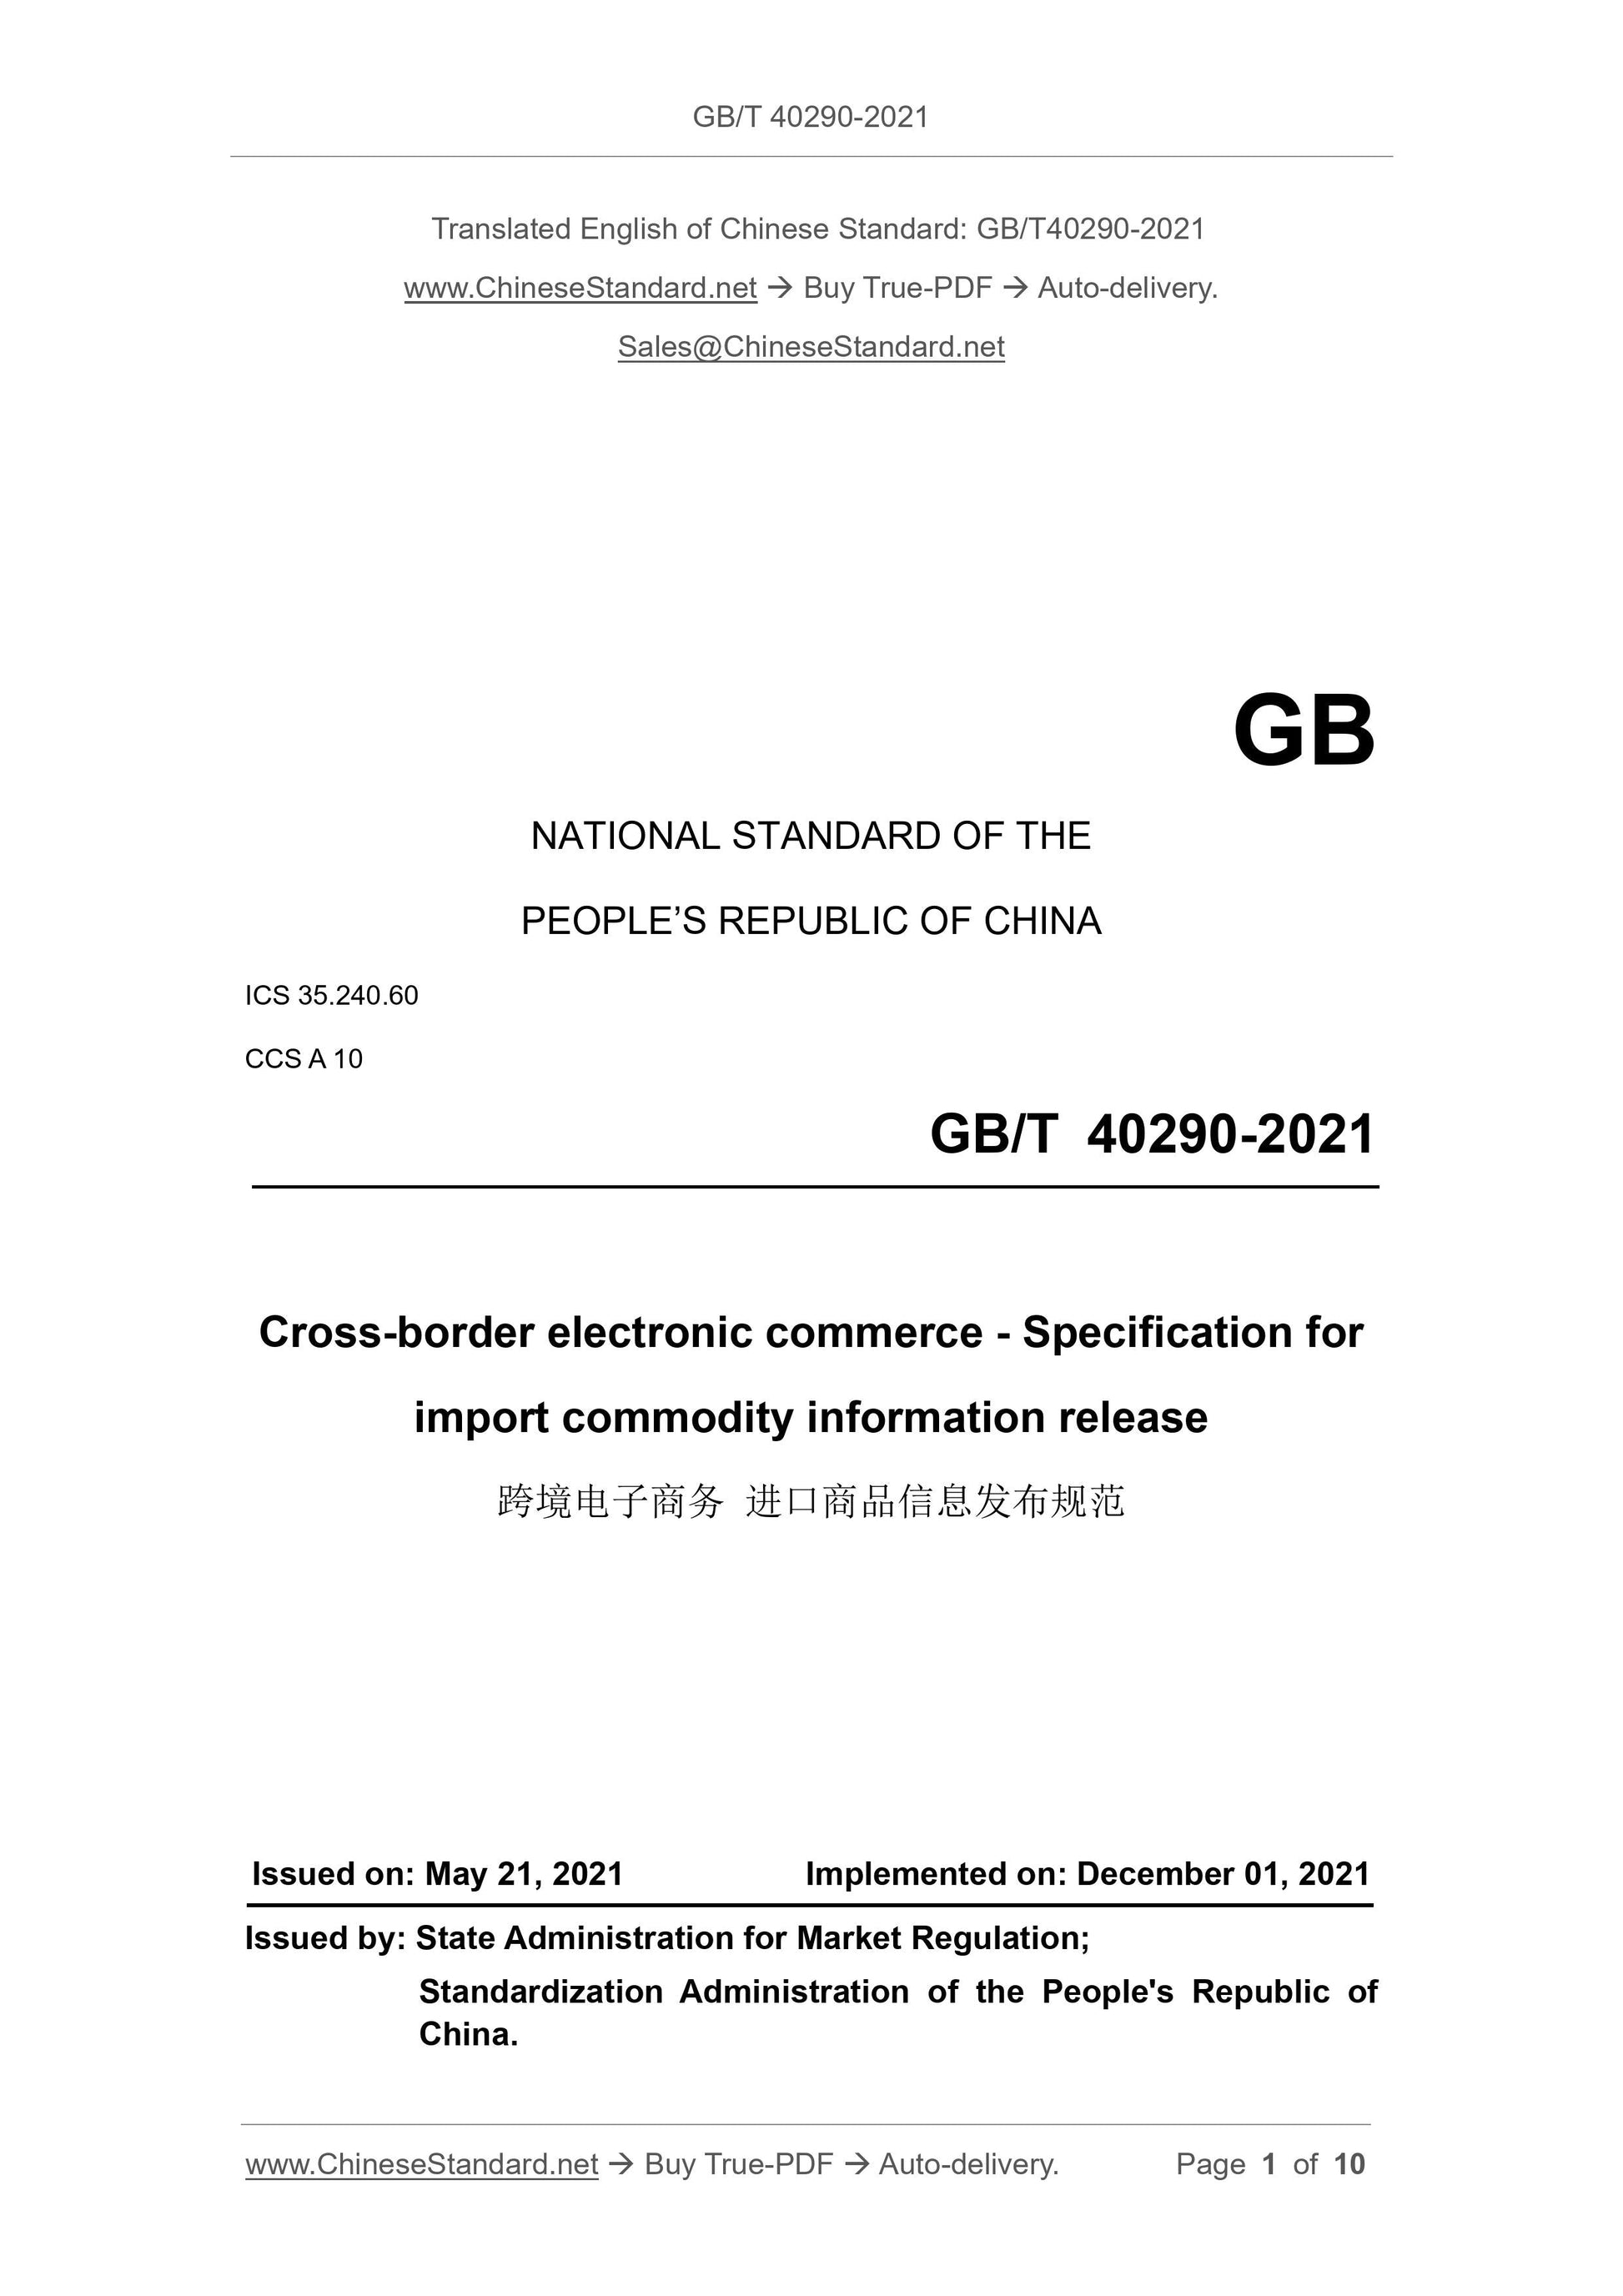 GBT40290-2021 Page 1